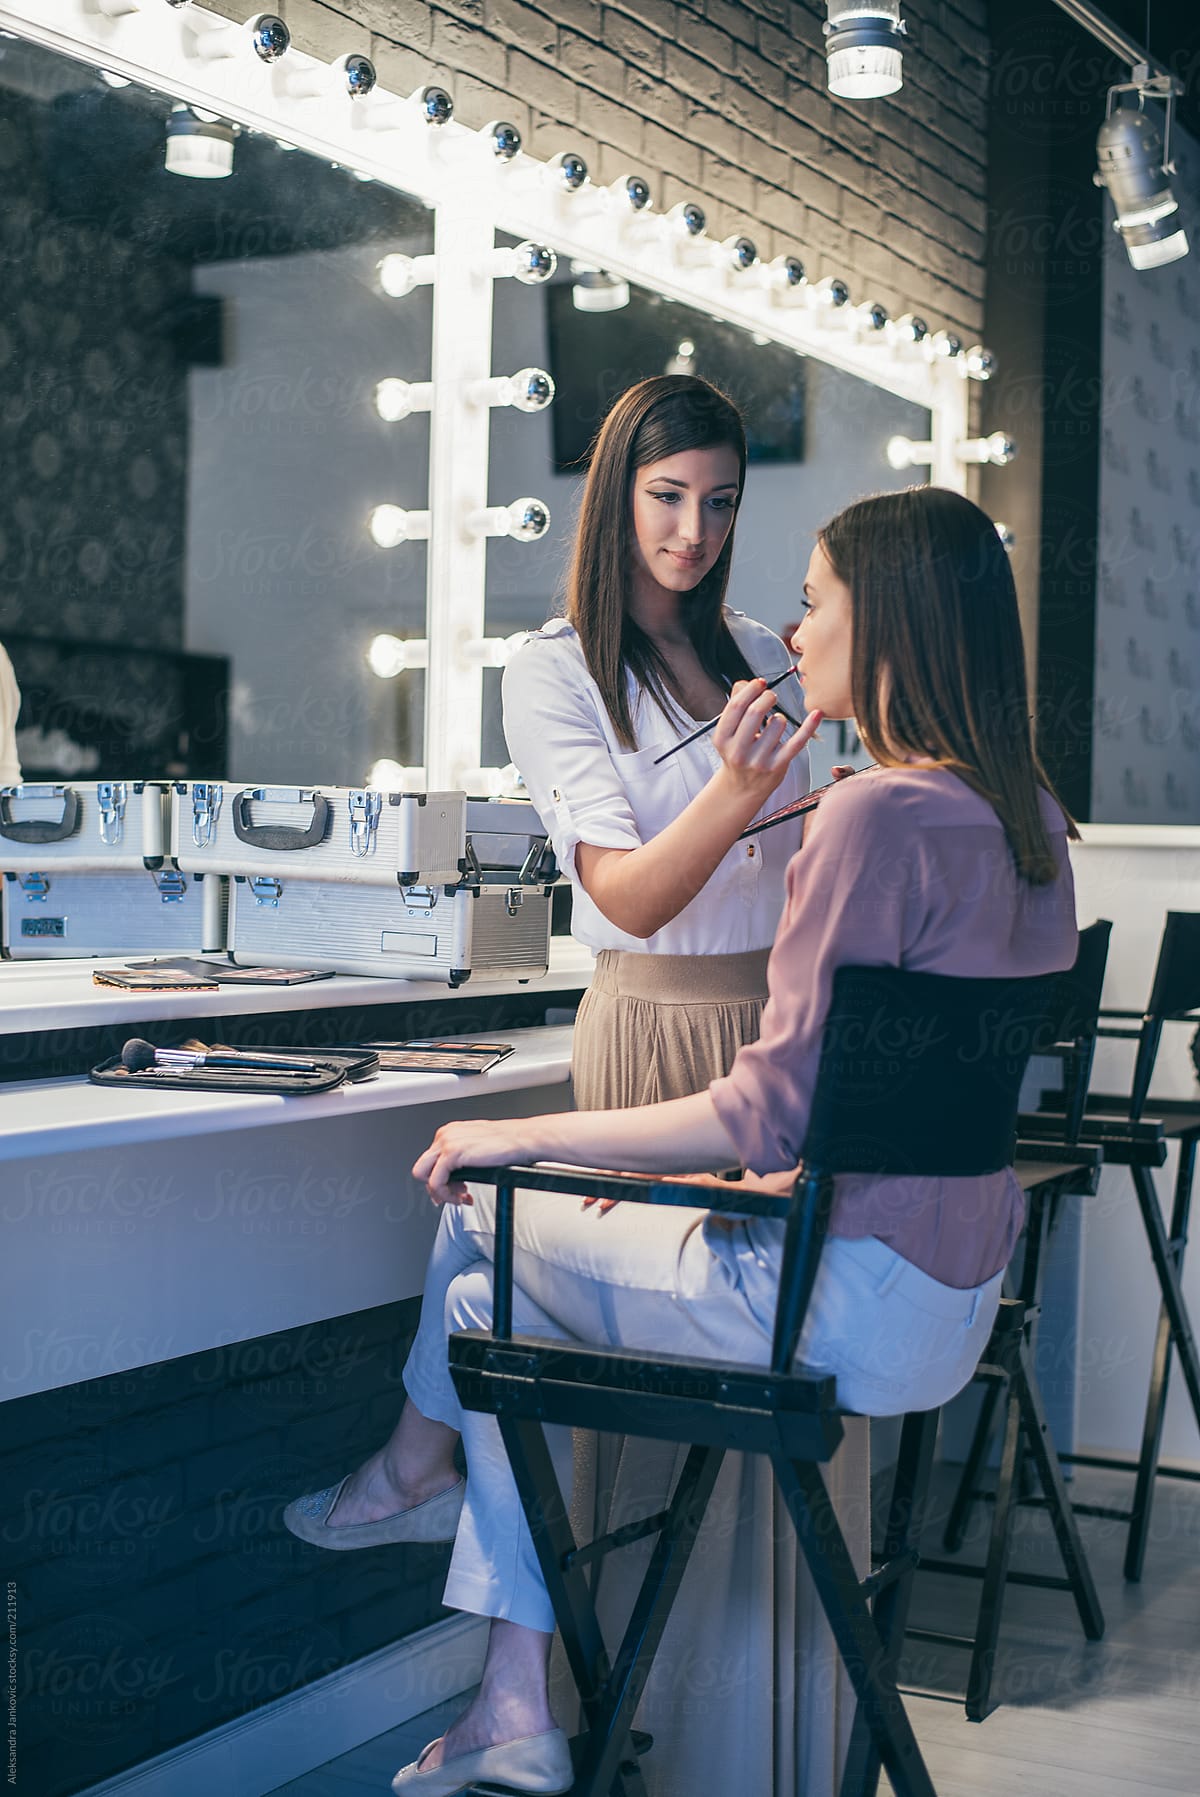 Female makeup artist applying makeup on her client at salon